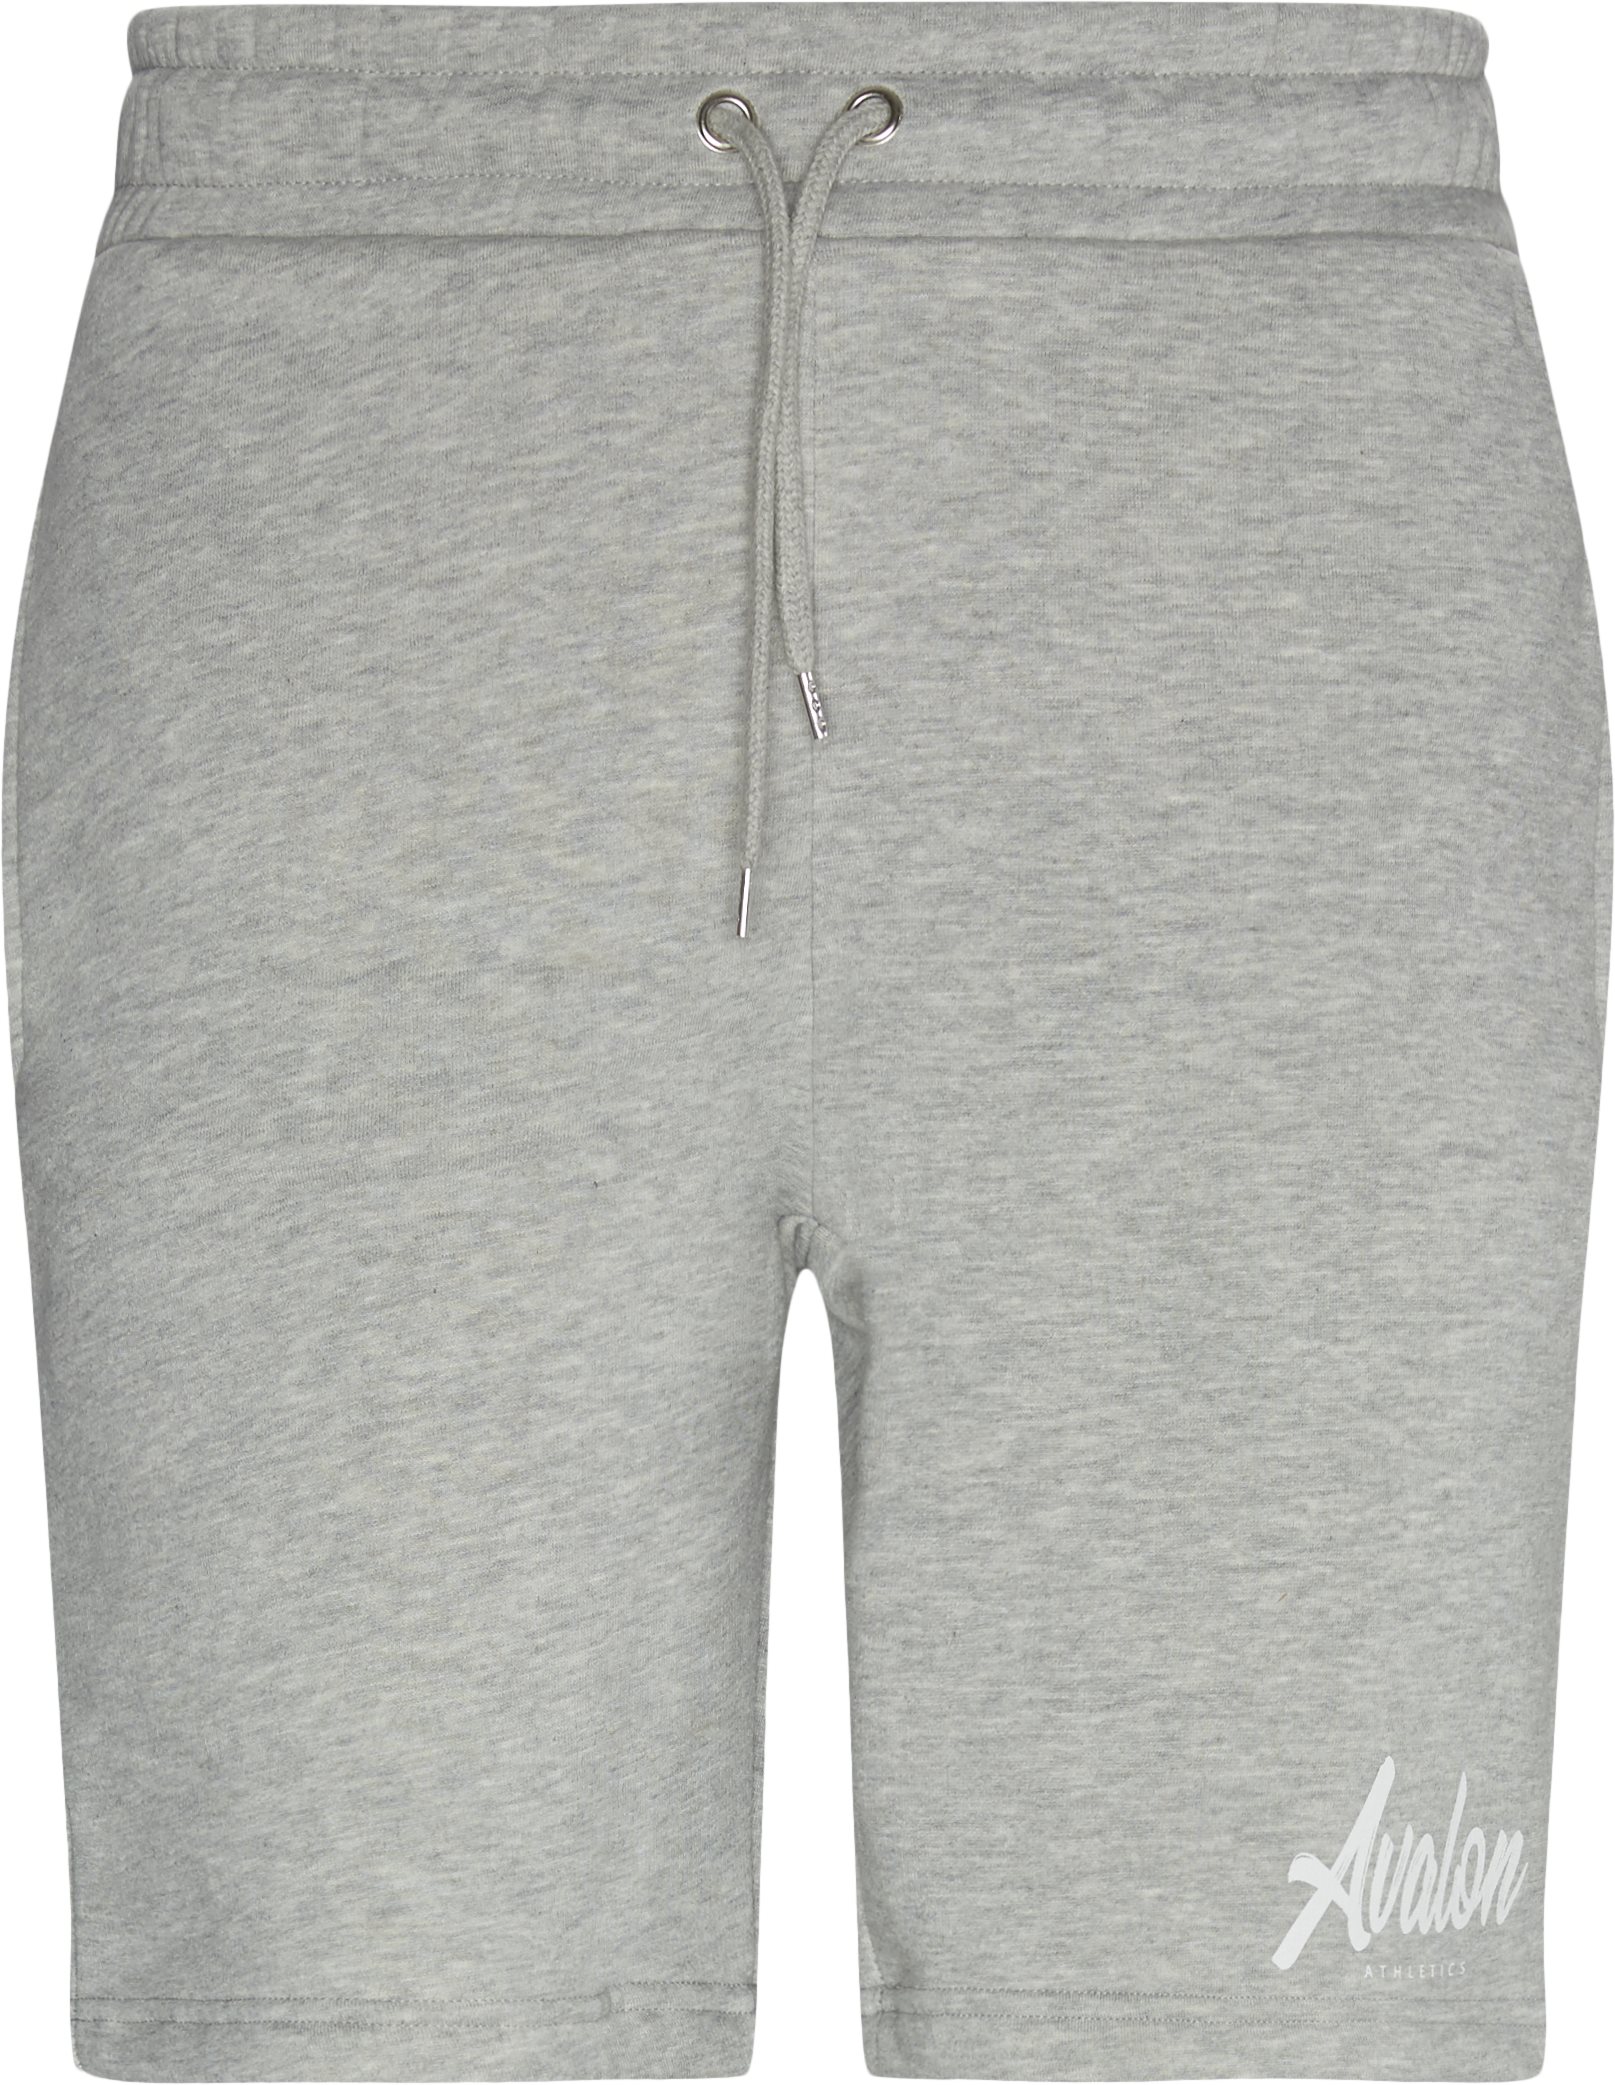 Aquifer Sweatshorts - Shorts - Regular fit - Grey